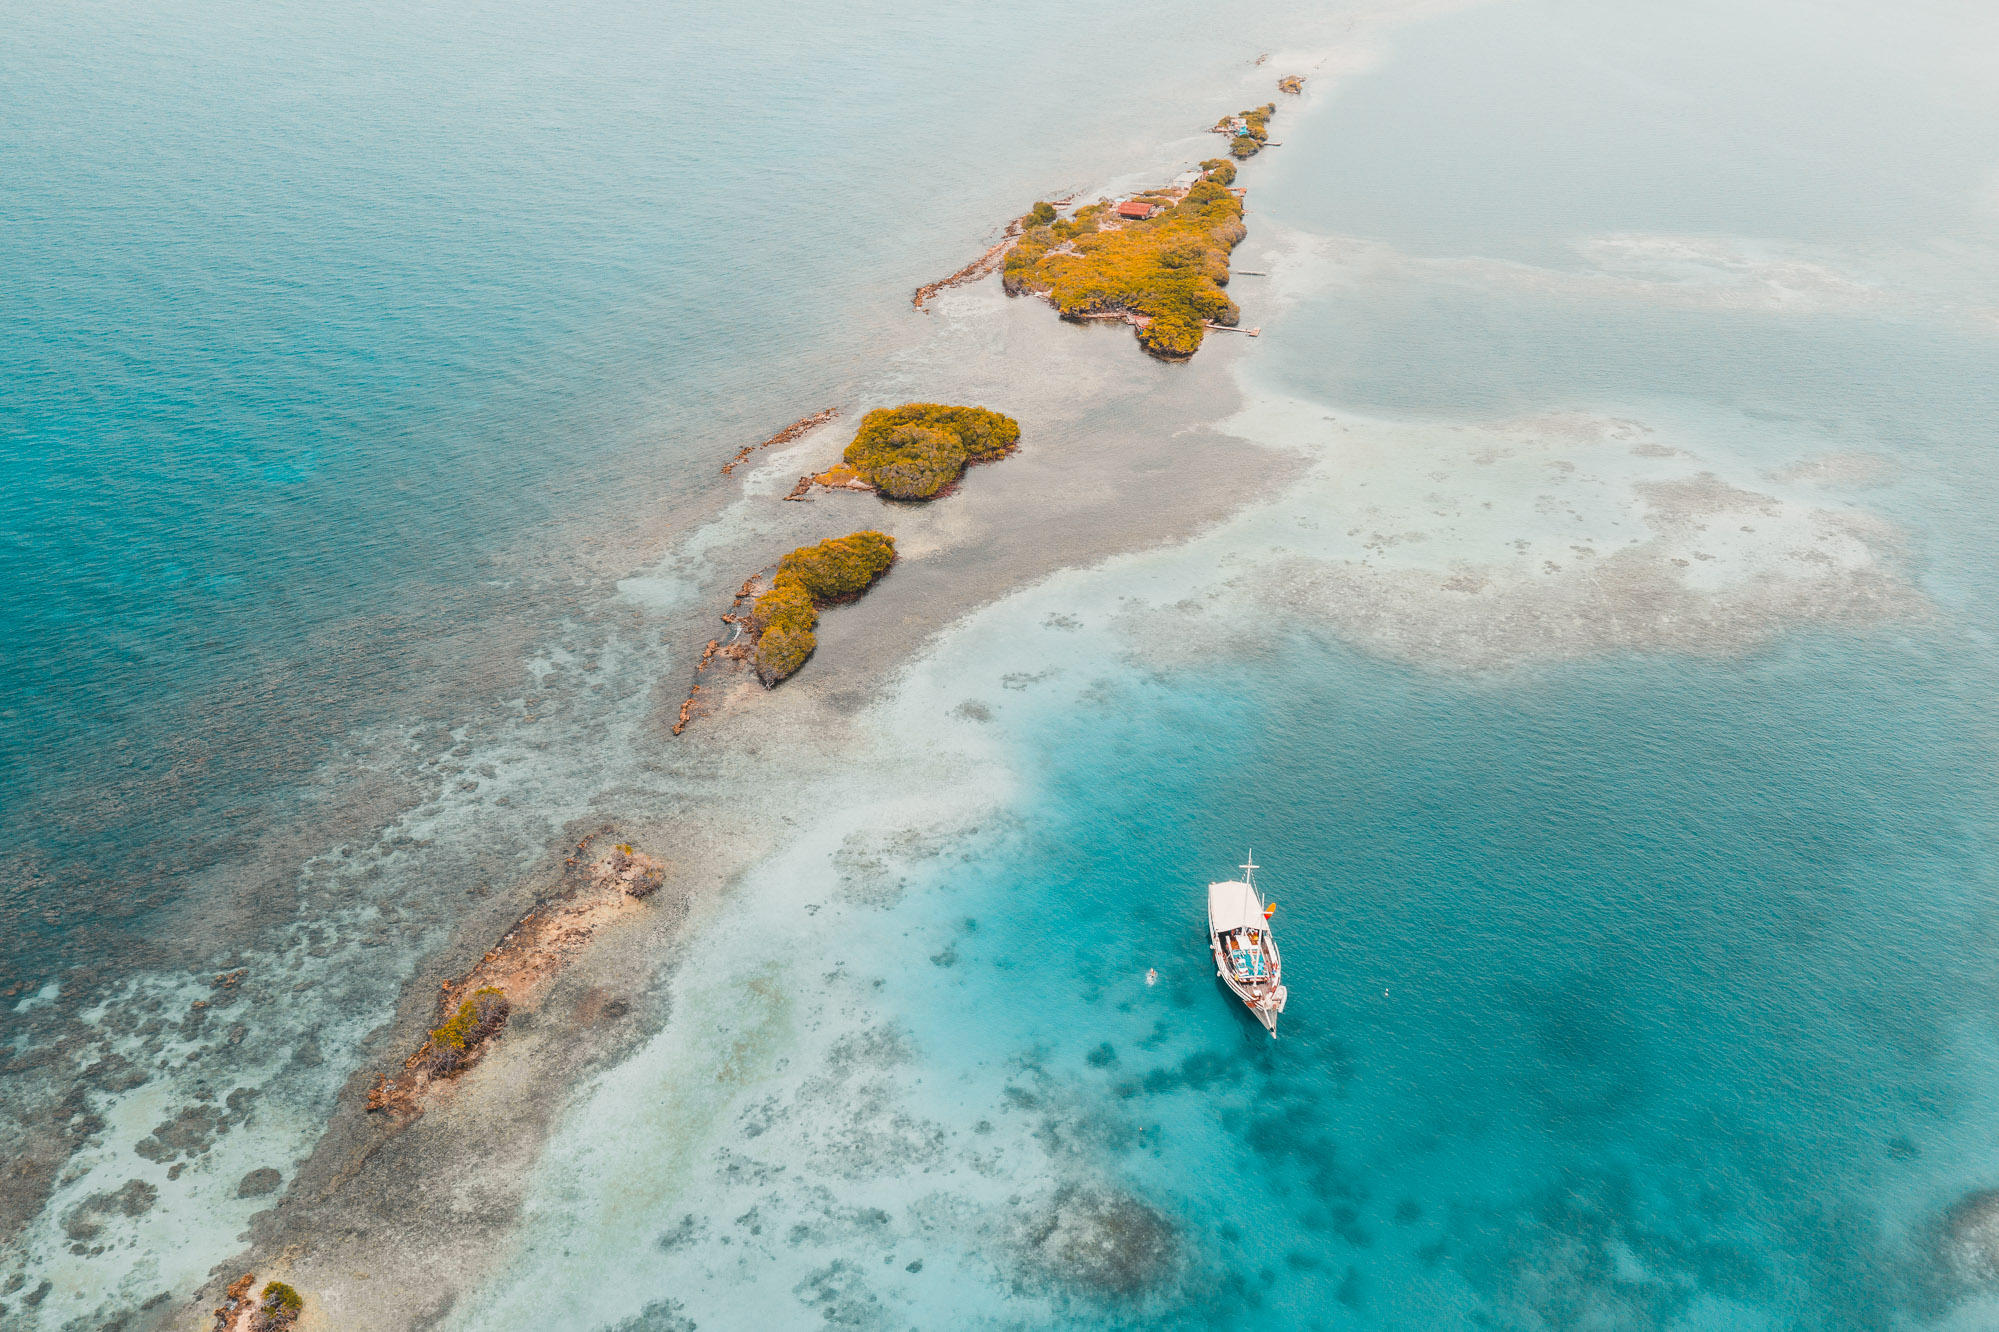 Mangel halto beach in Aruba from above via Find Us Lost